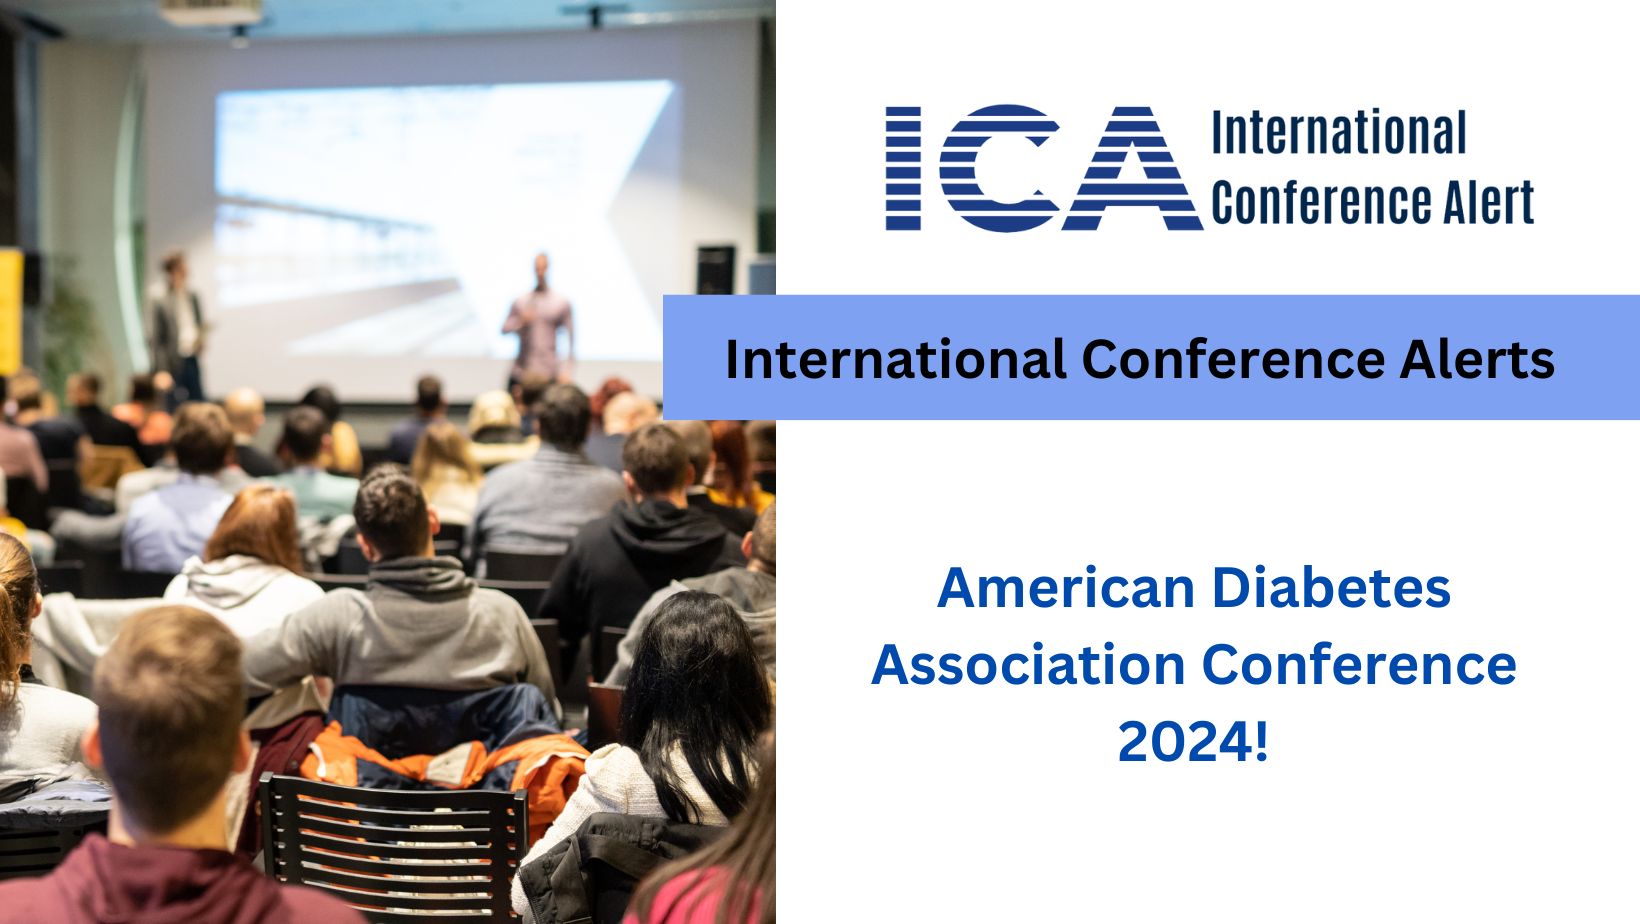 American Diabetes Association Conference 2024 